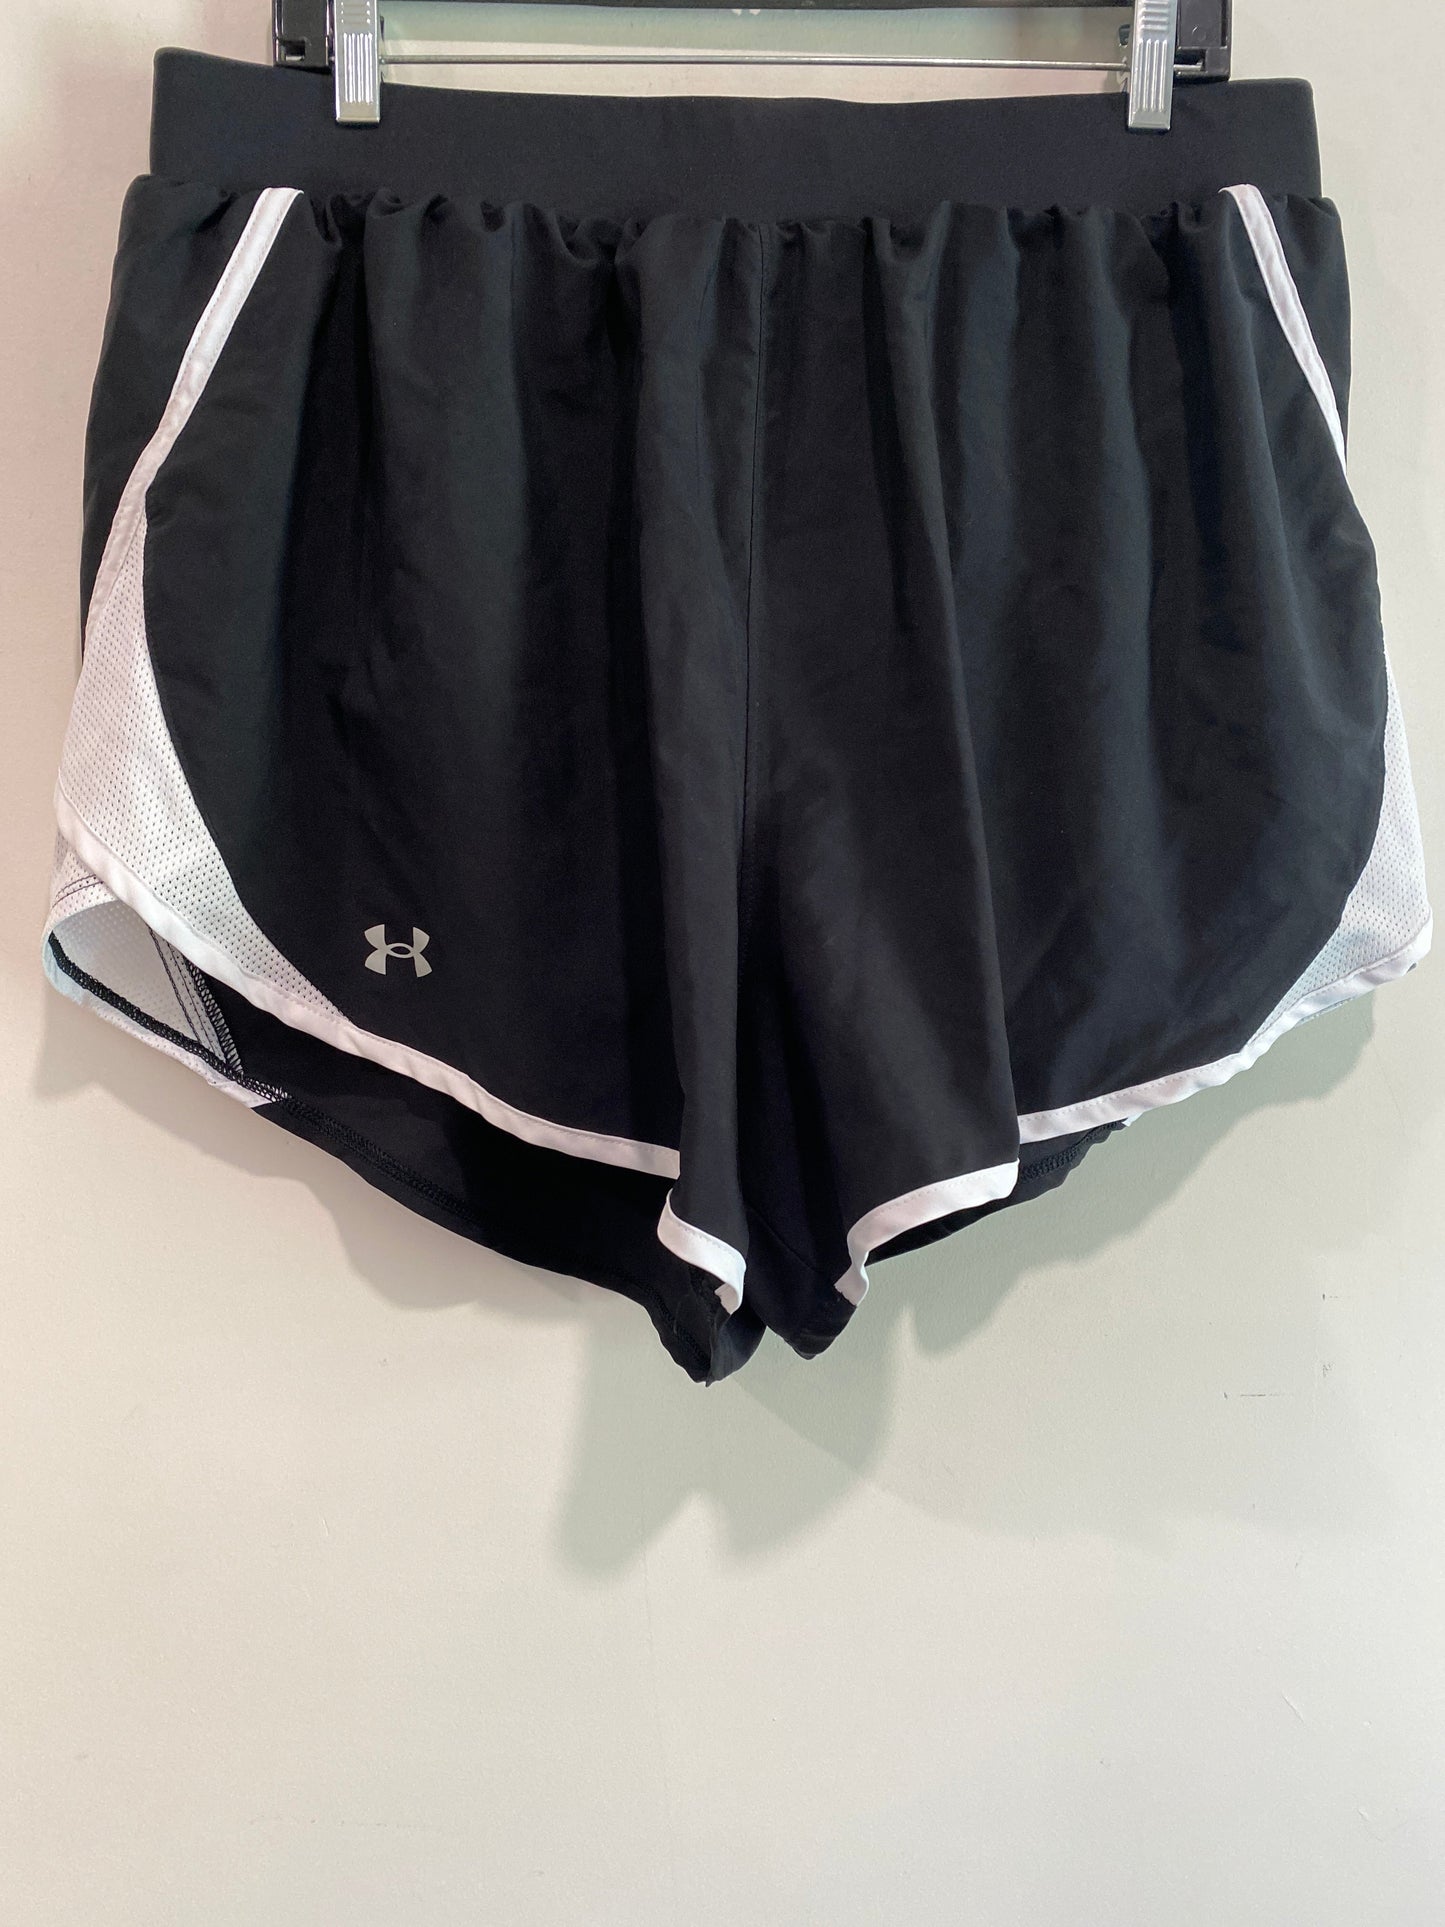 Black Athletic Shorts Under Armour, Size 1x